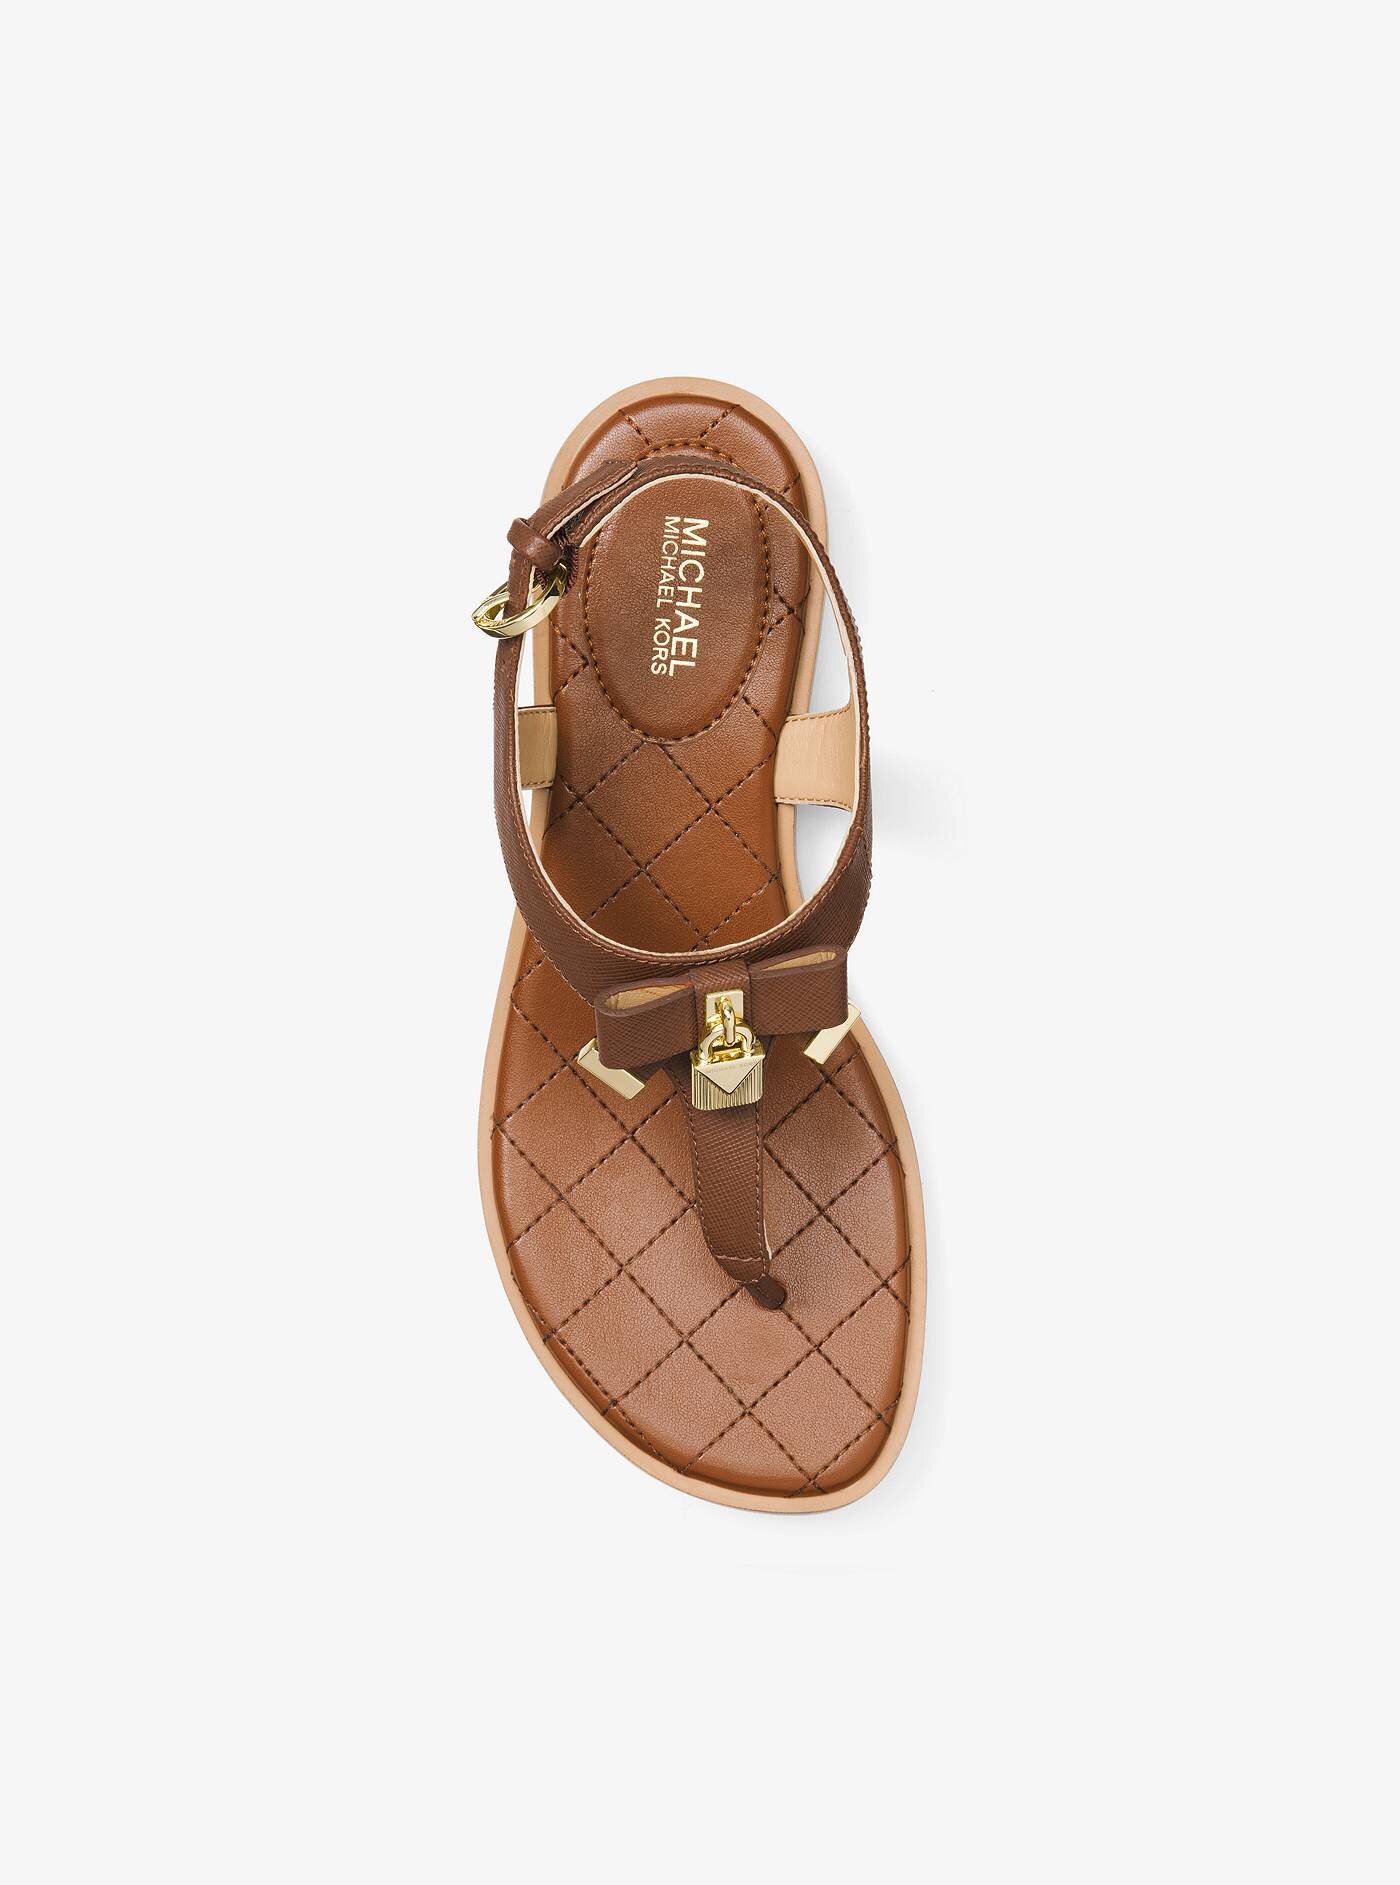 michael kors alice leather sandal